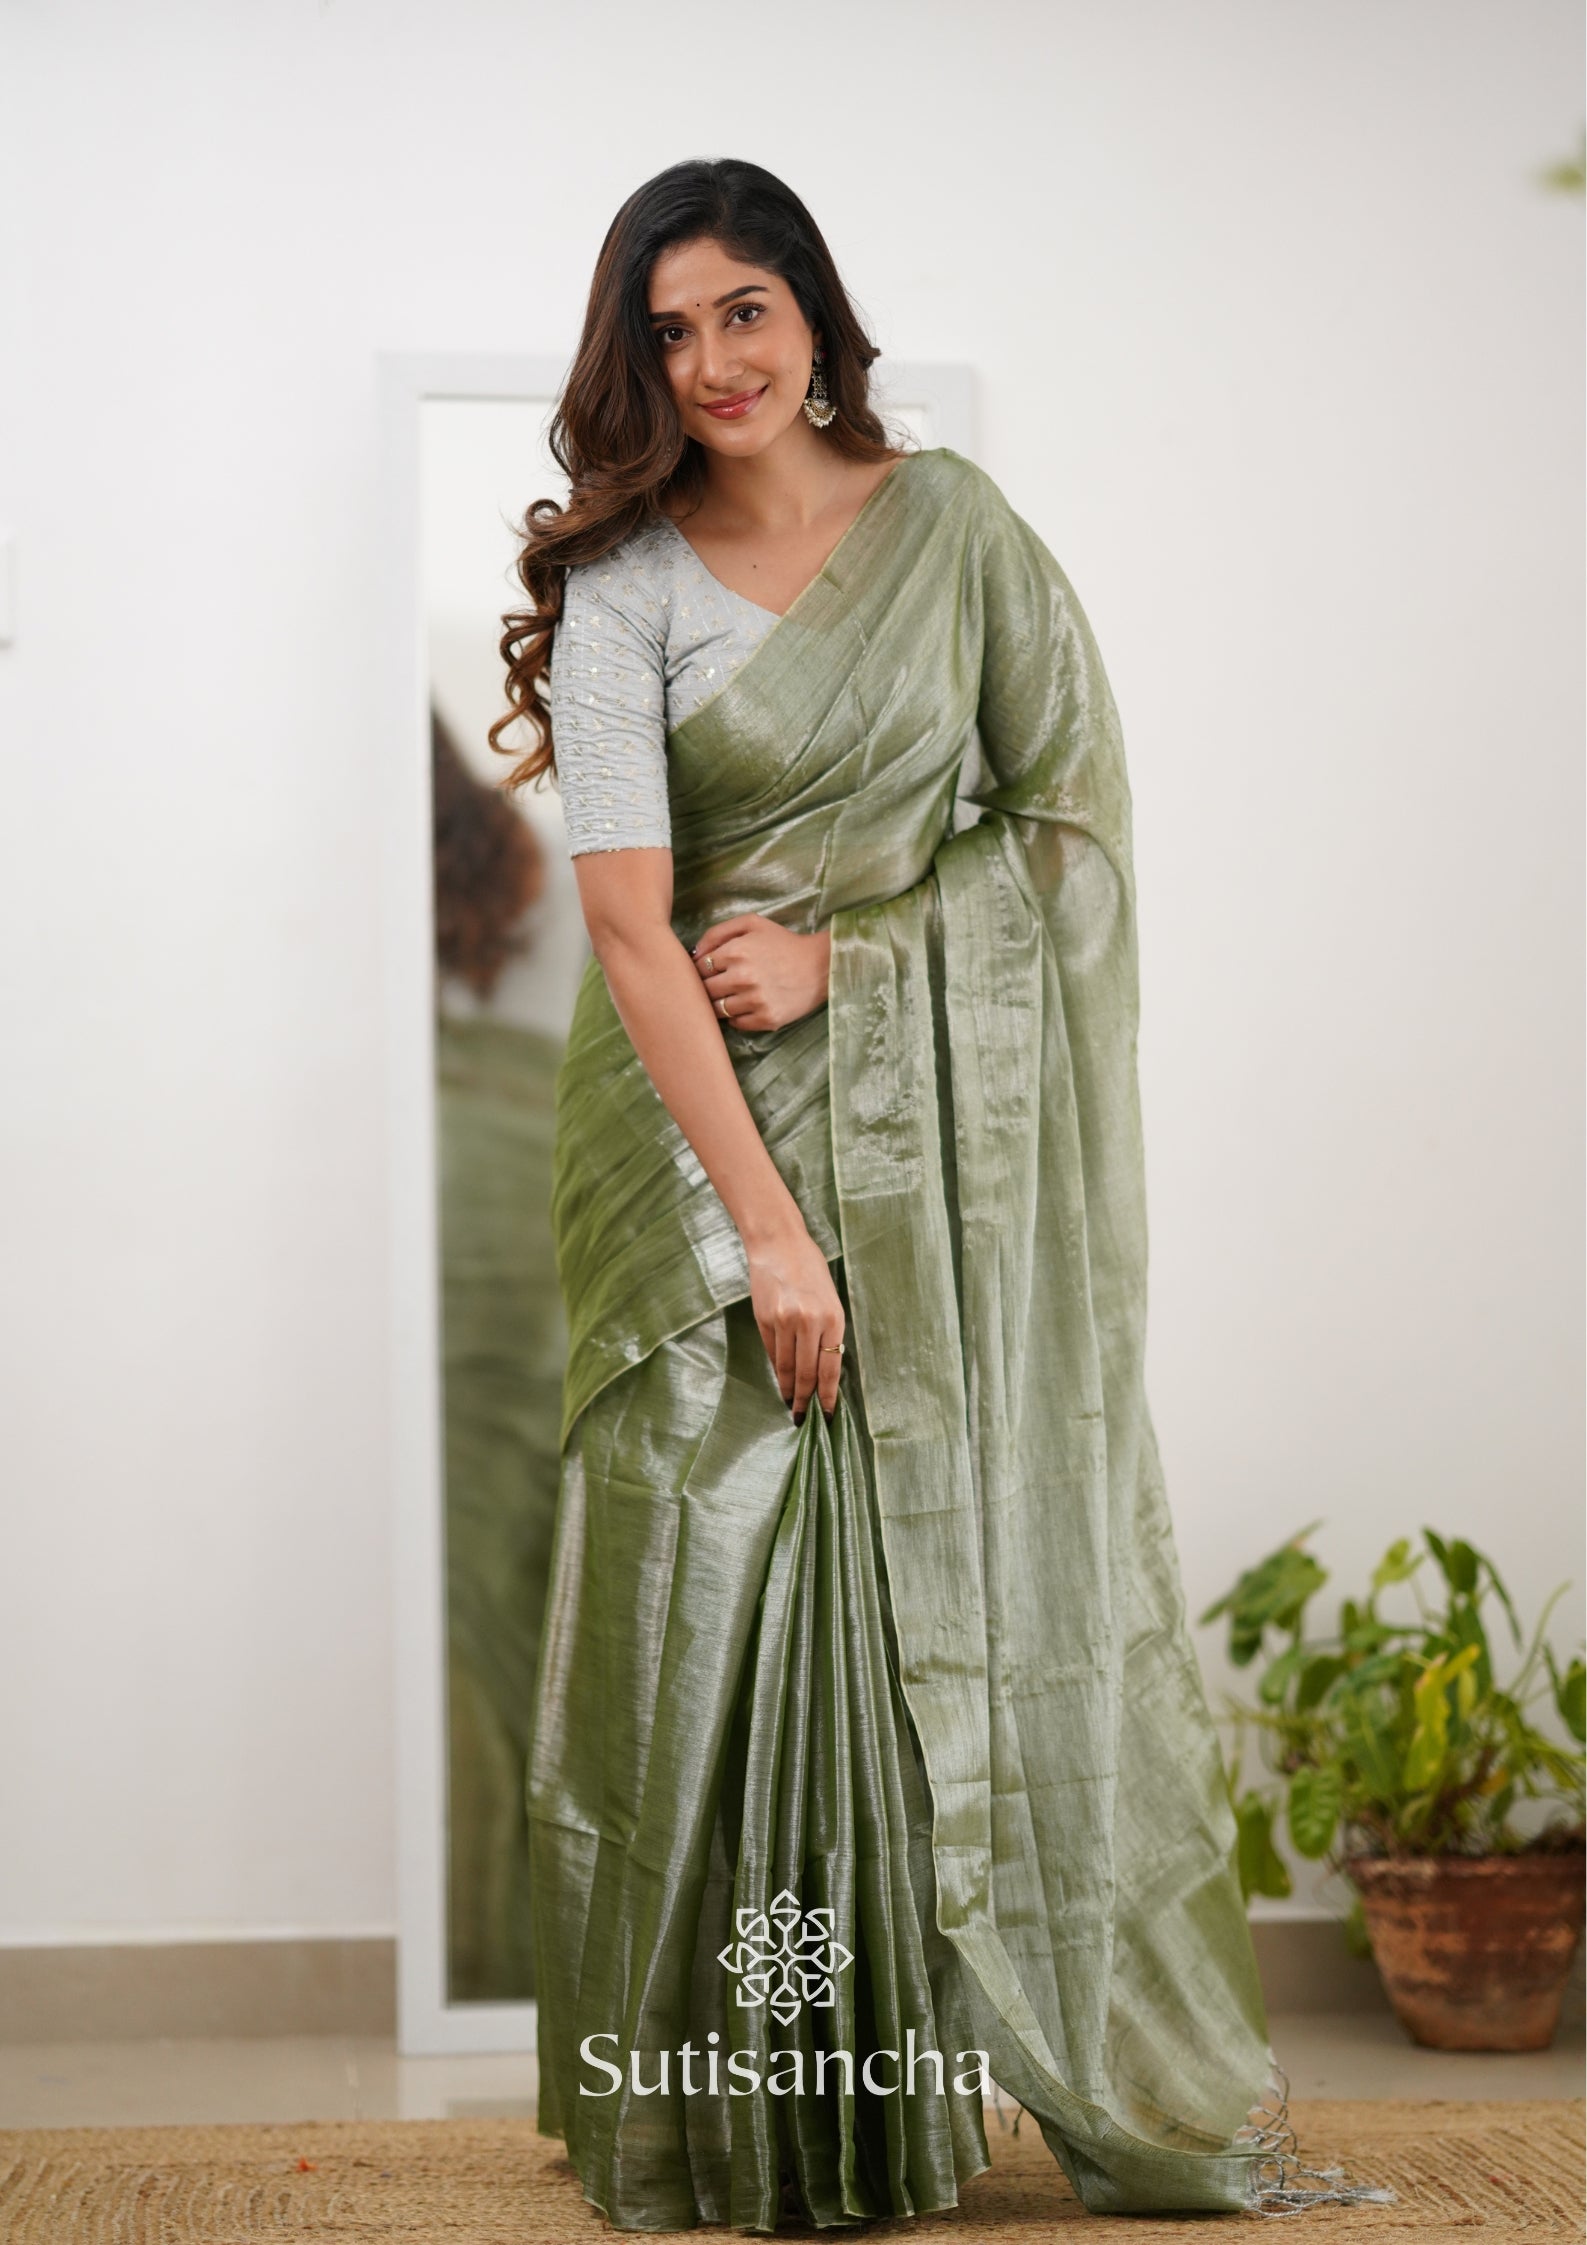 Sutisancha Olive Green Handloom Tissue Saree With Designer Blouse